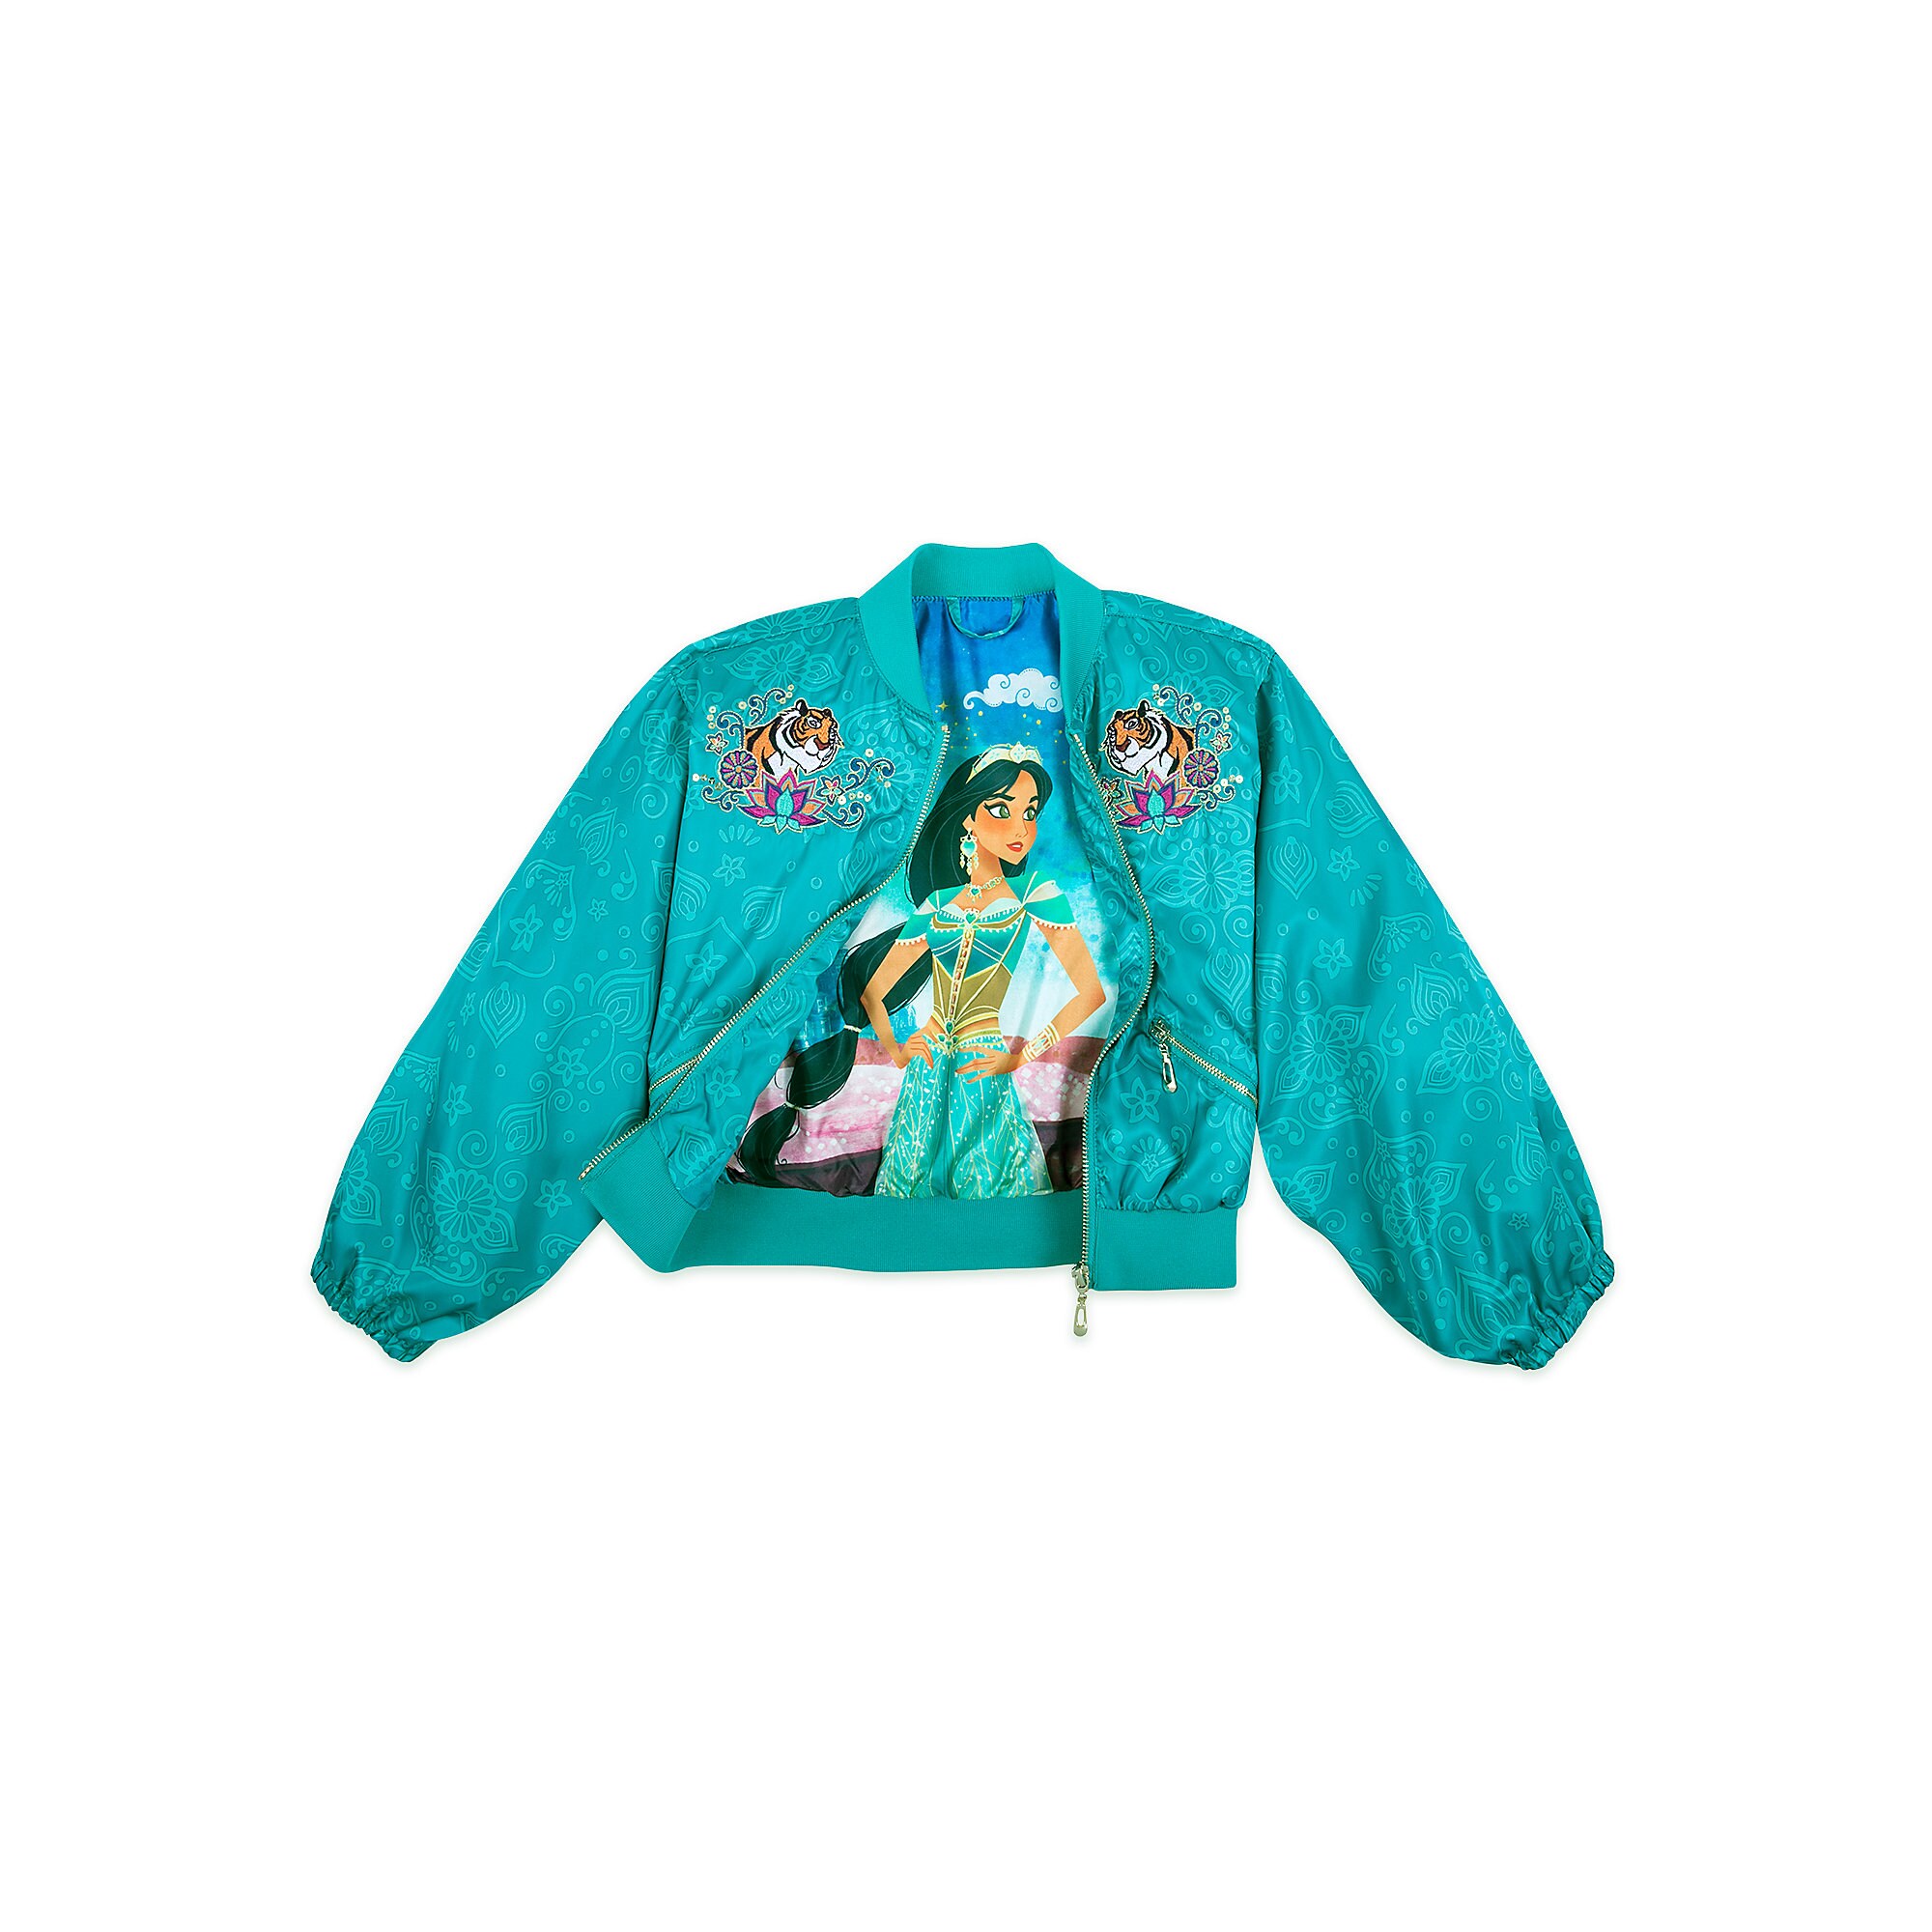 Aladdin Bomber Jacket for Girls - Live Action Film